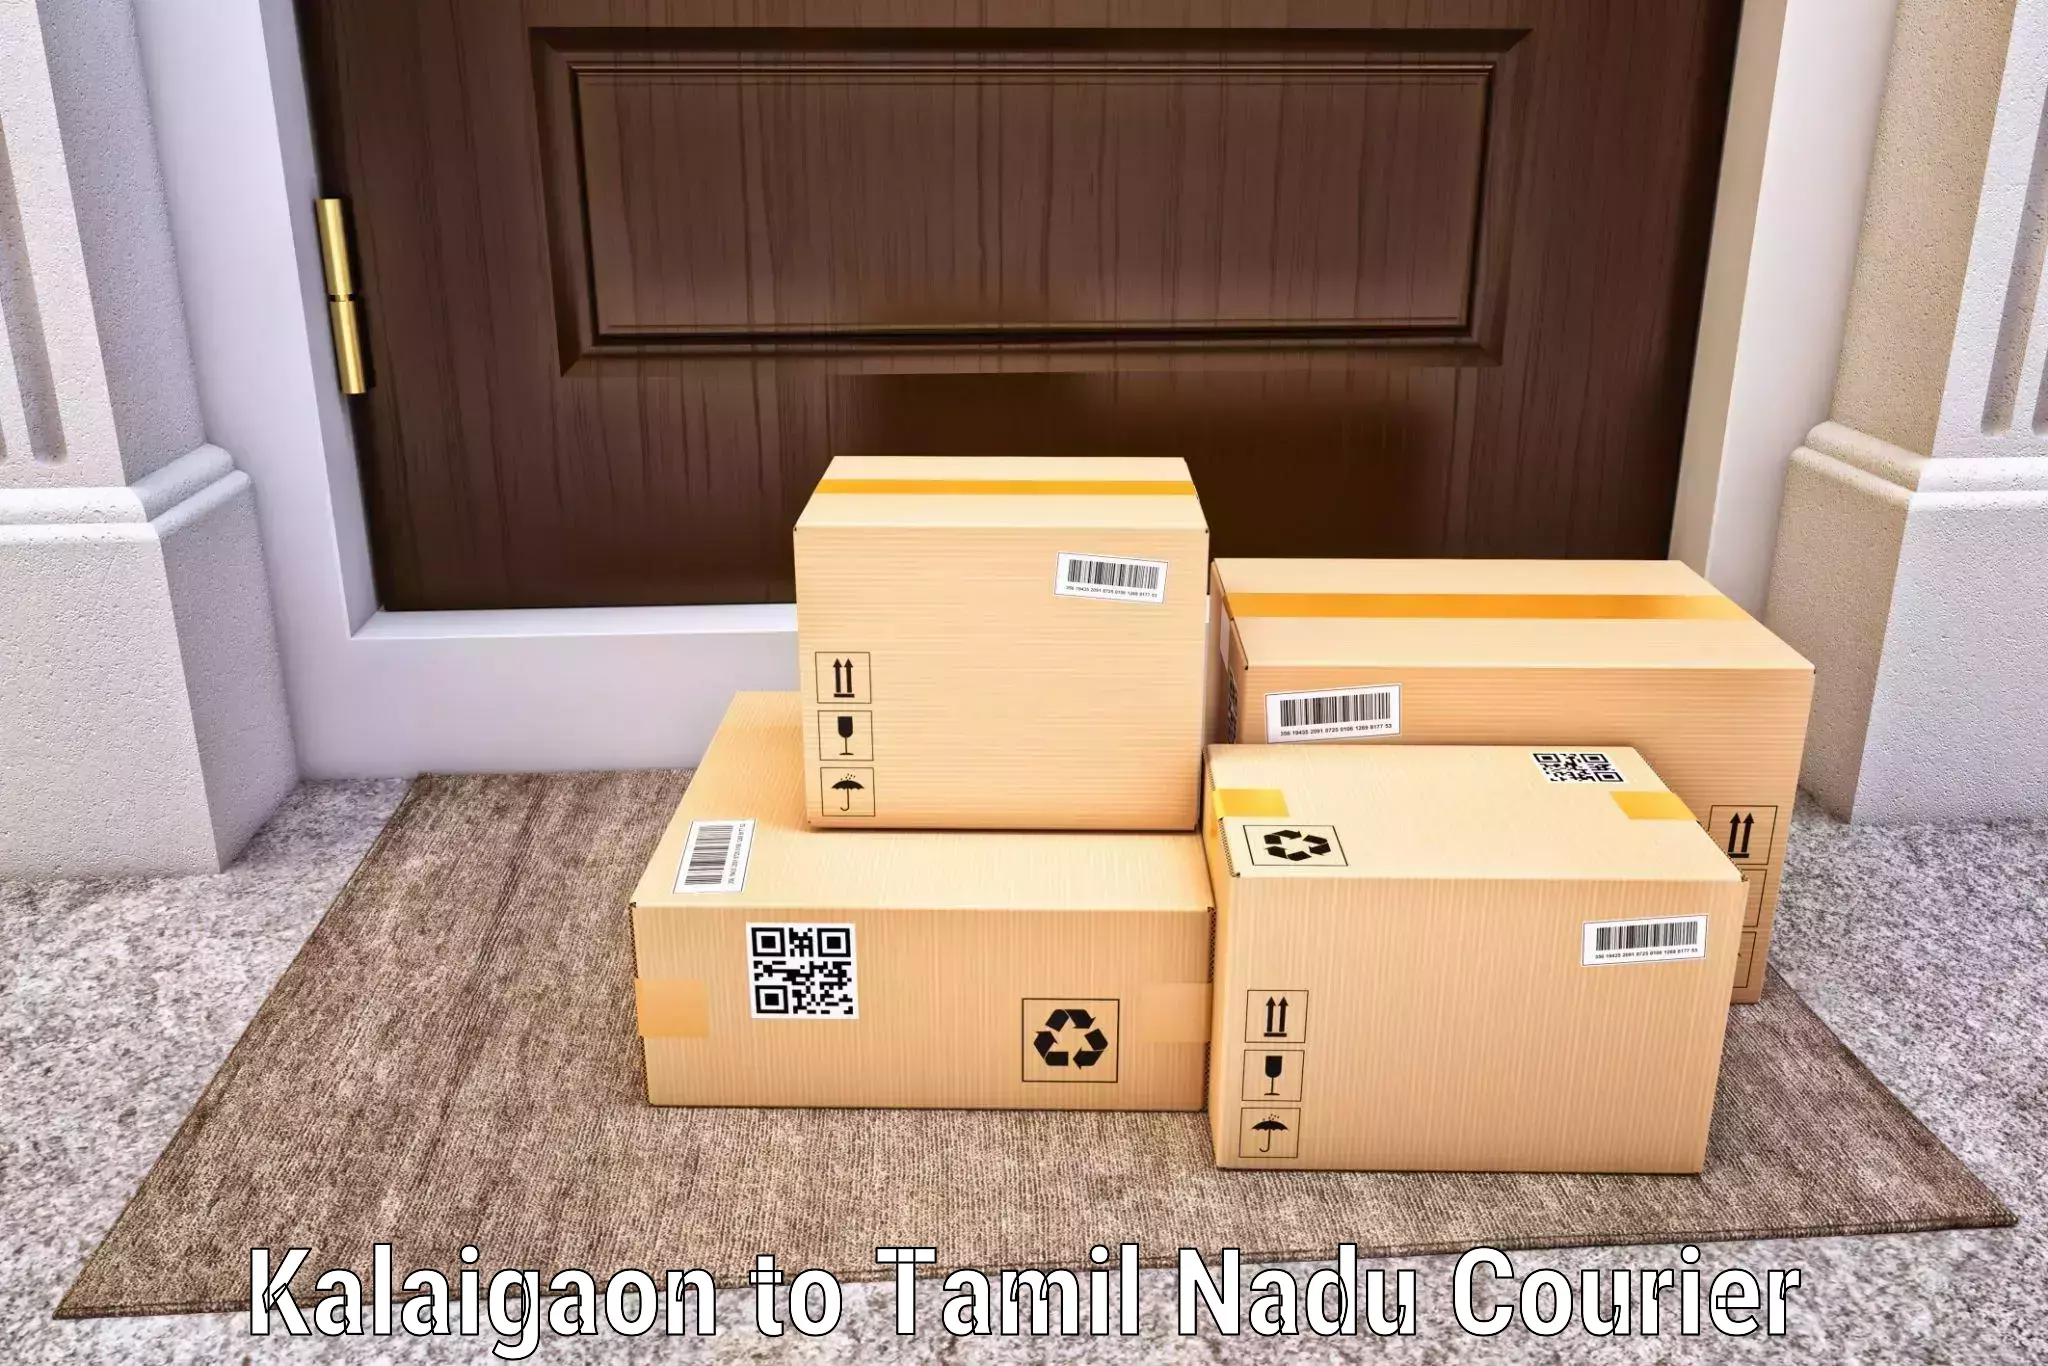 Urgent courier needs Kalaigaon to Sriperumbudur